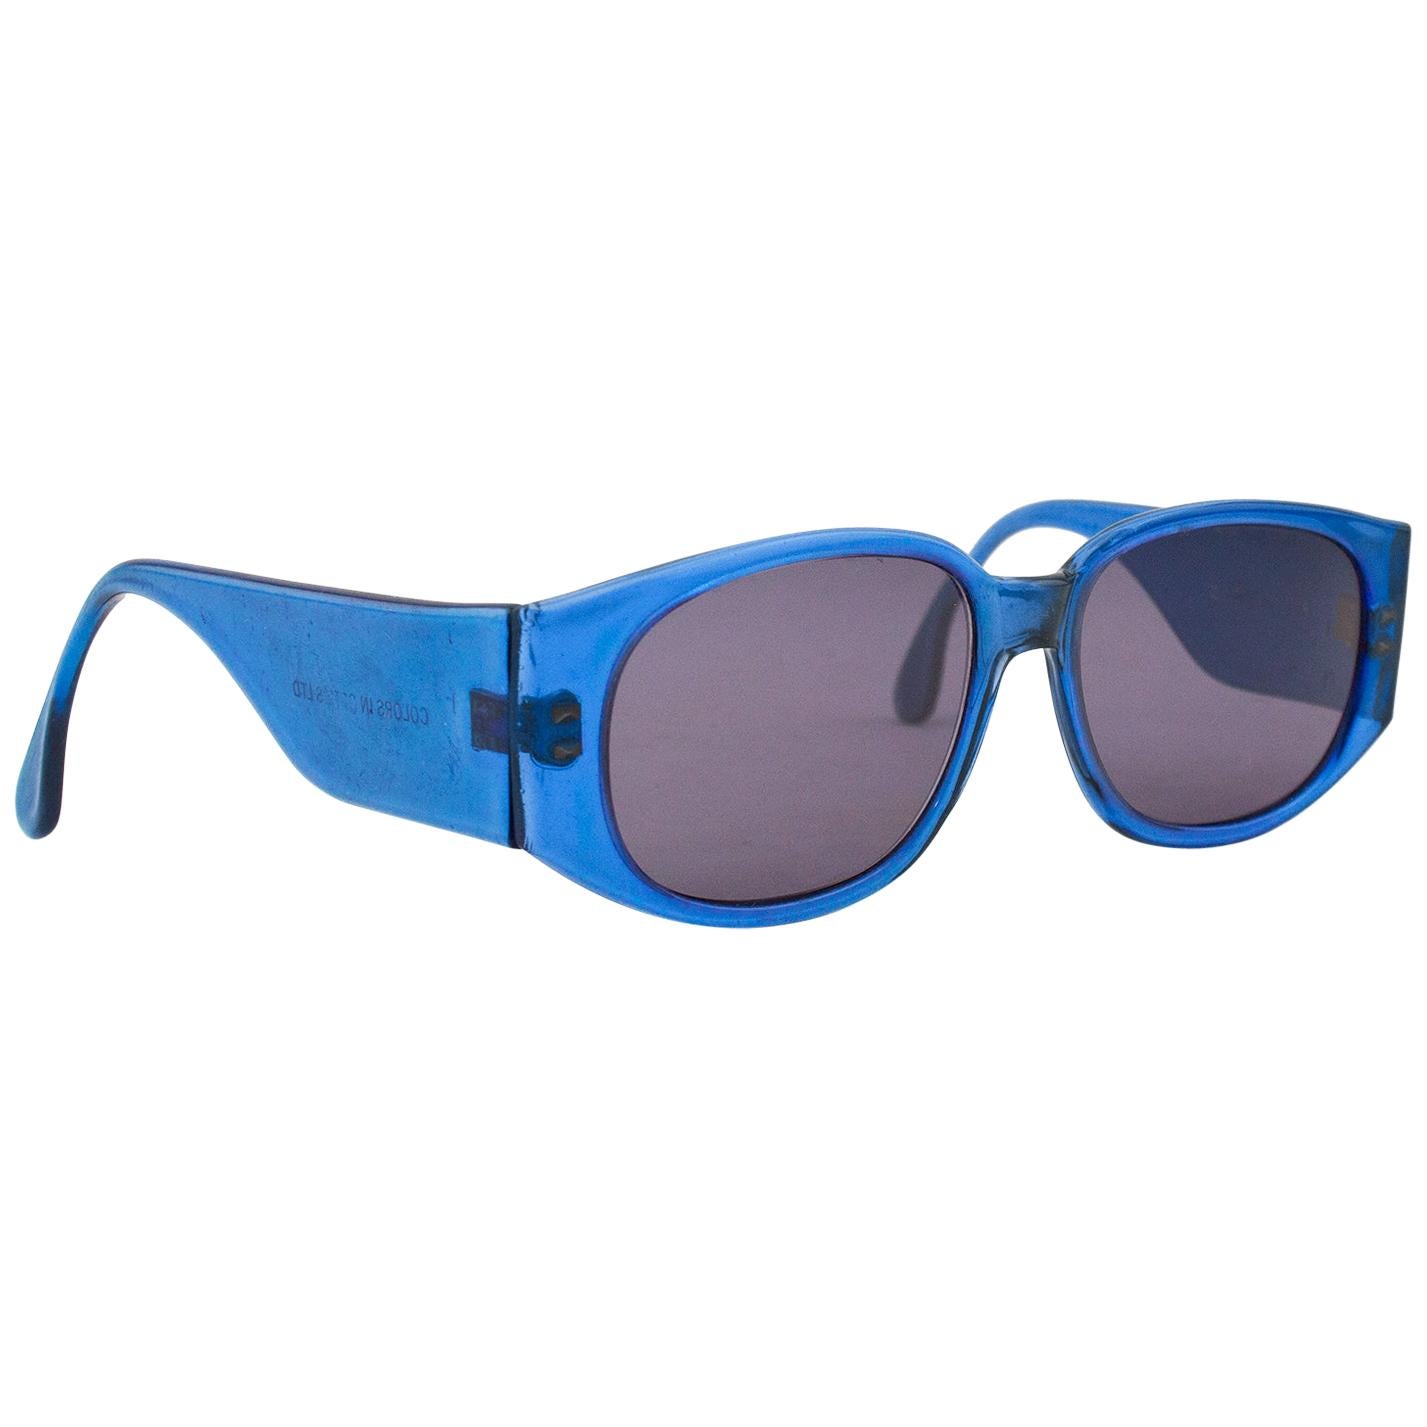 Early 1980s Sanford Hutton Colors of Optics Blue Sunglasses 